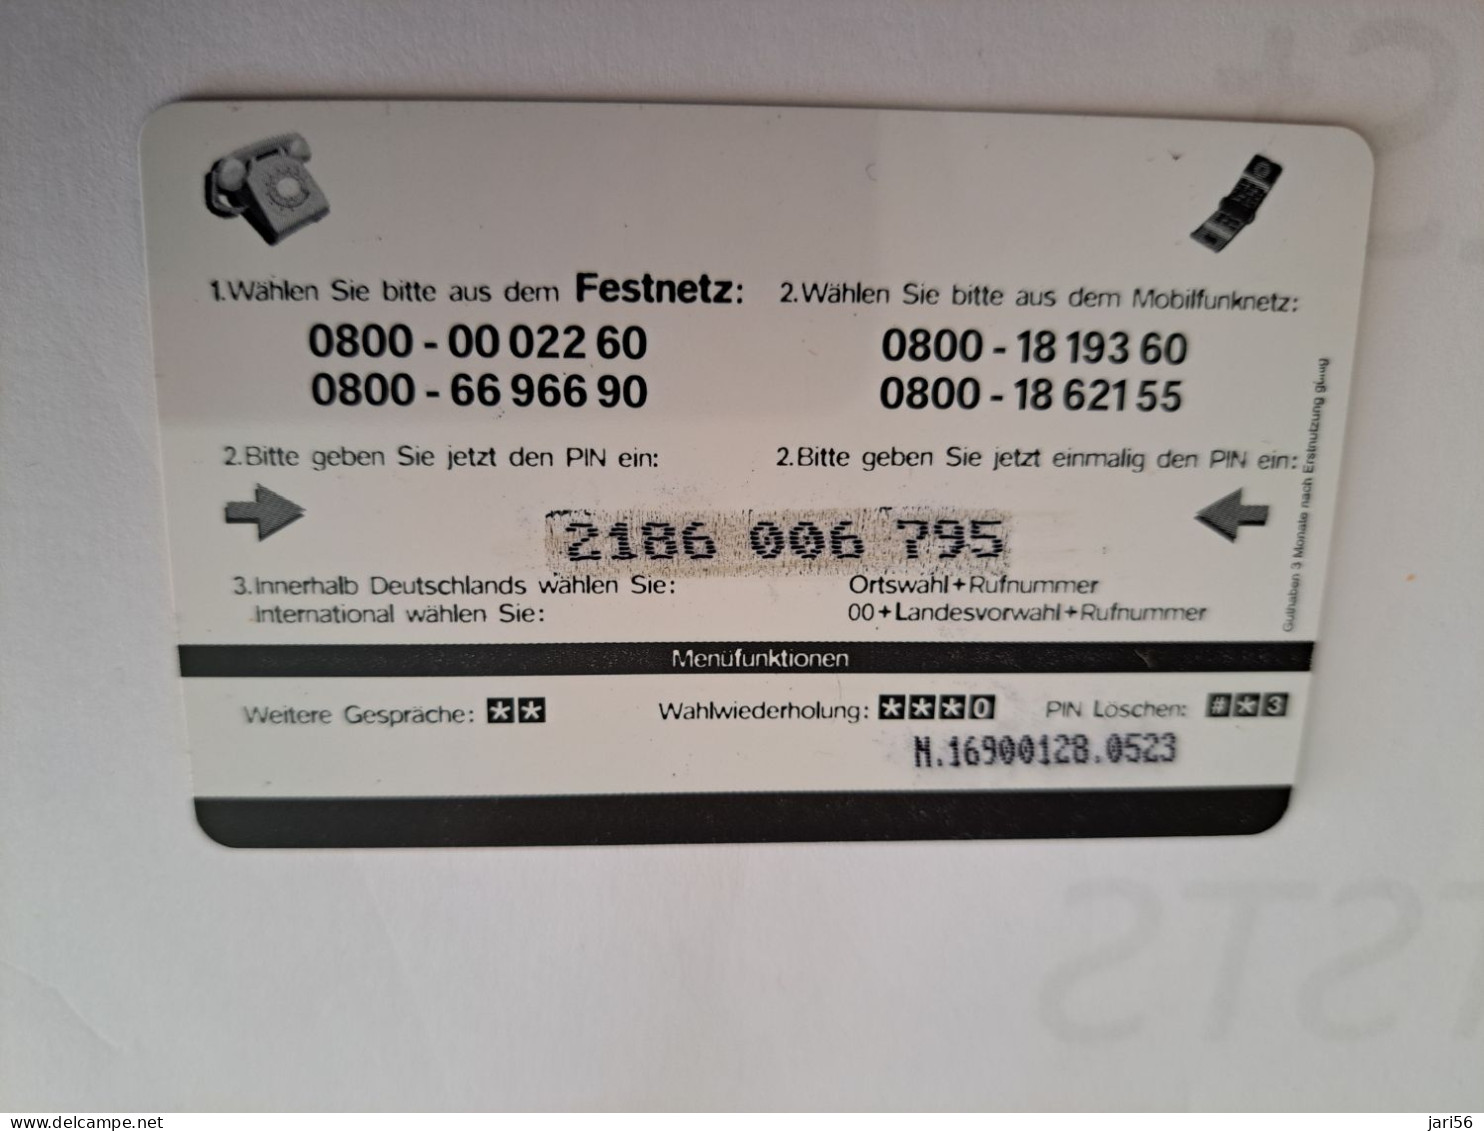 DUITSLAND/GERMANY  € 6,- / PLANET/ PIGEON BIRD   ON CARD        Fine Used  PREPAID  **16530** - Cellulari, Carte Prepagate E Ricariche